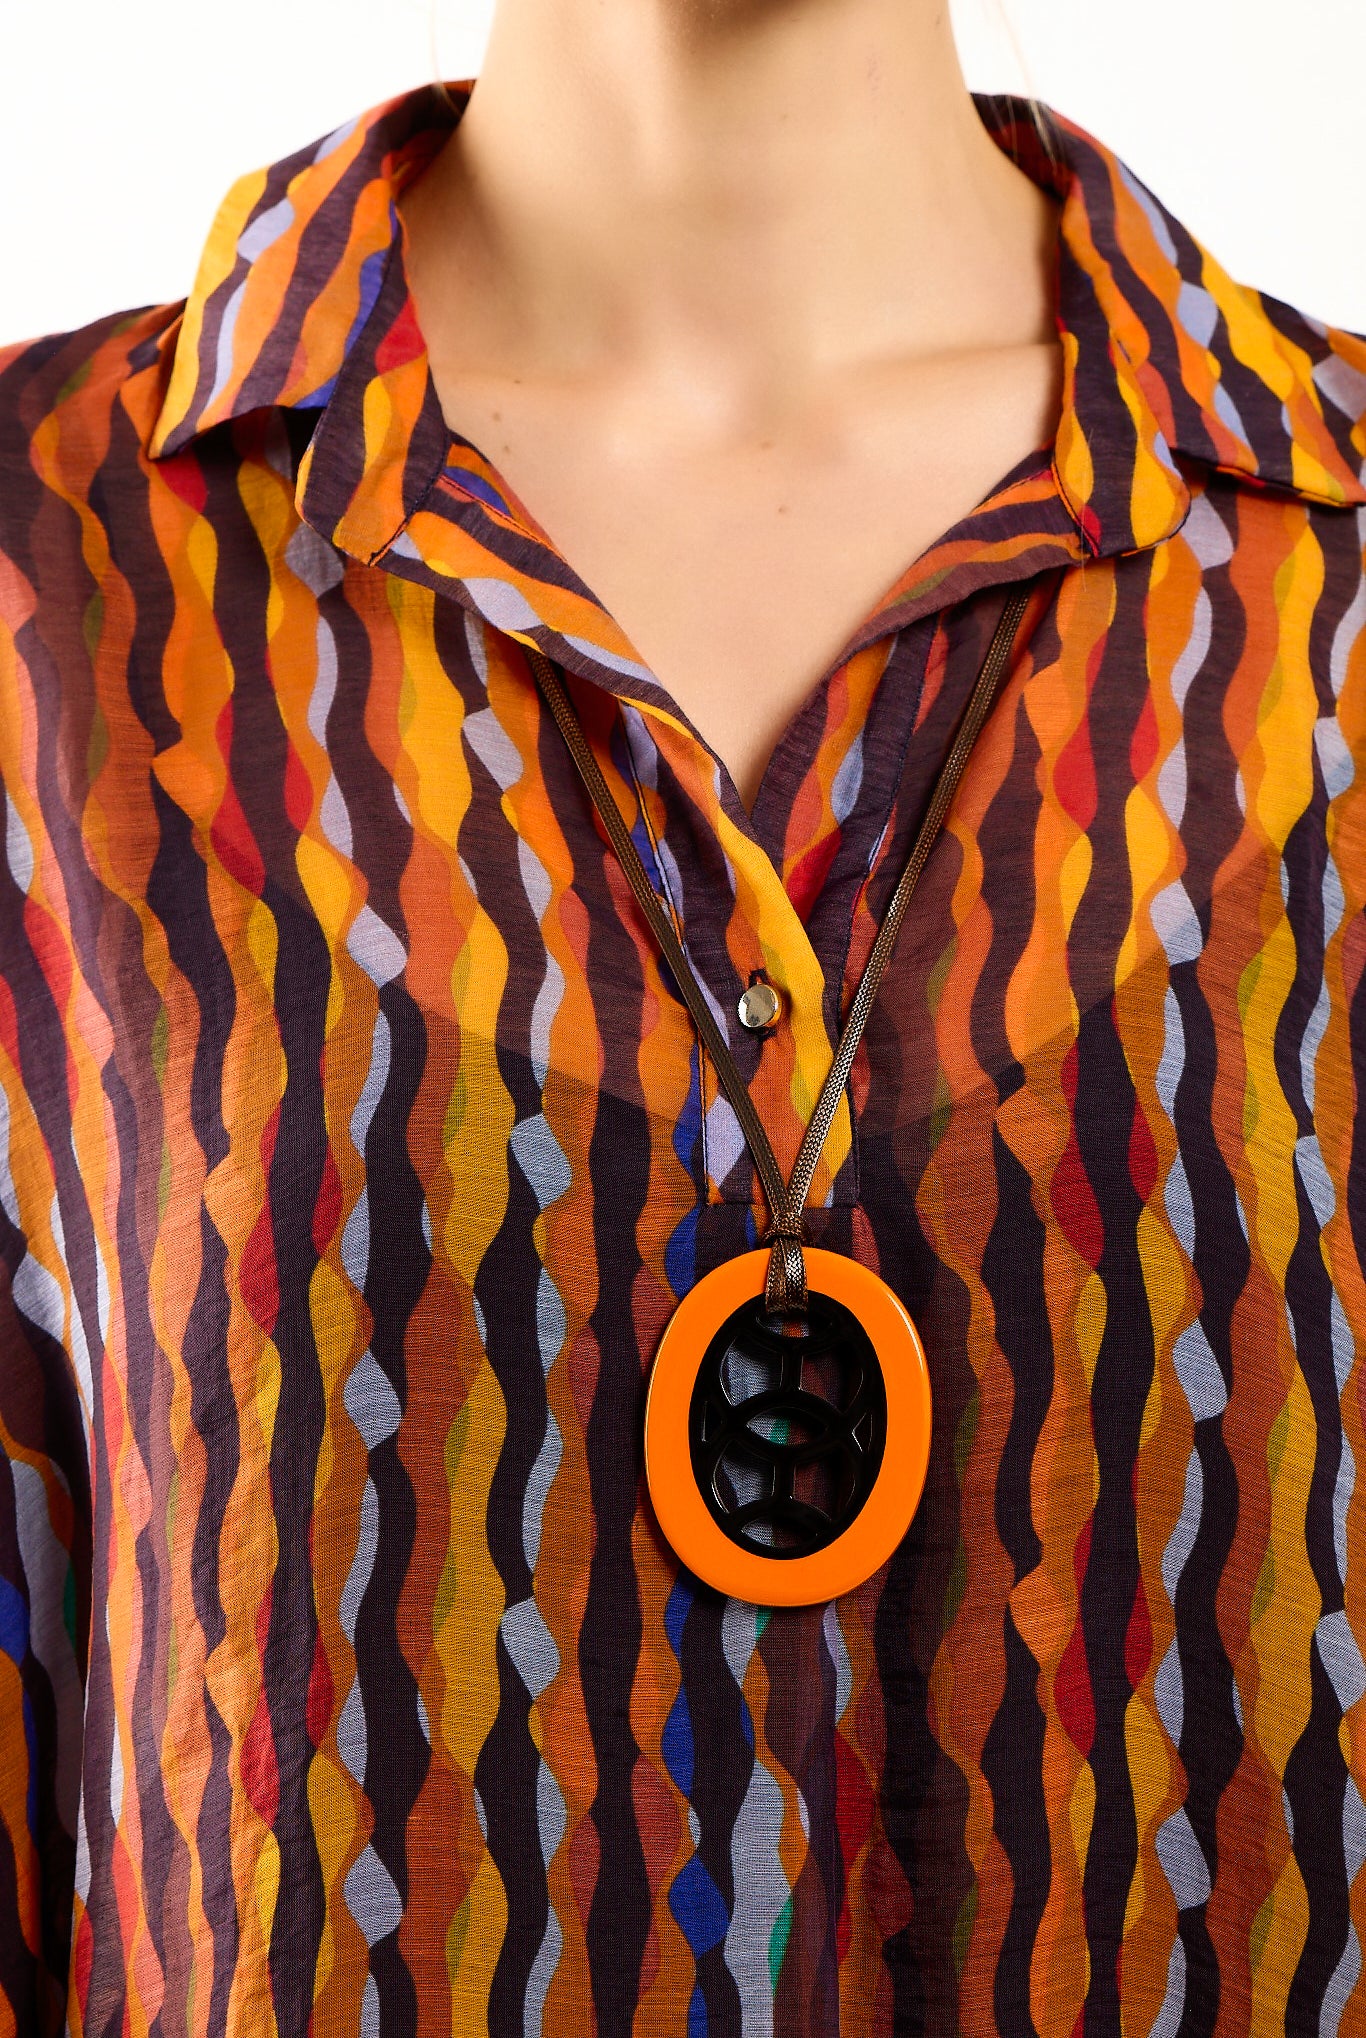 OOH LA LA Orange Oval Pendant - Magpie Style